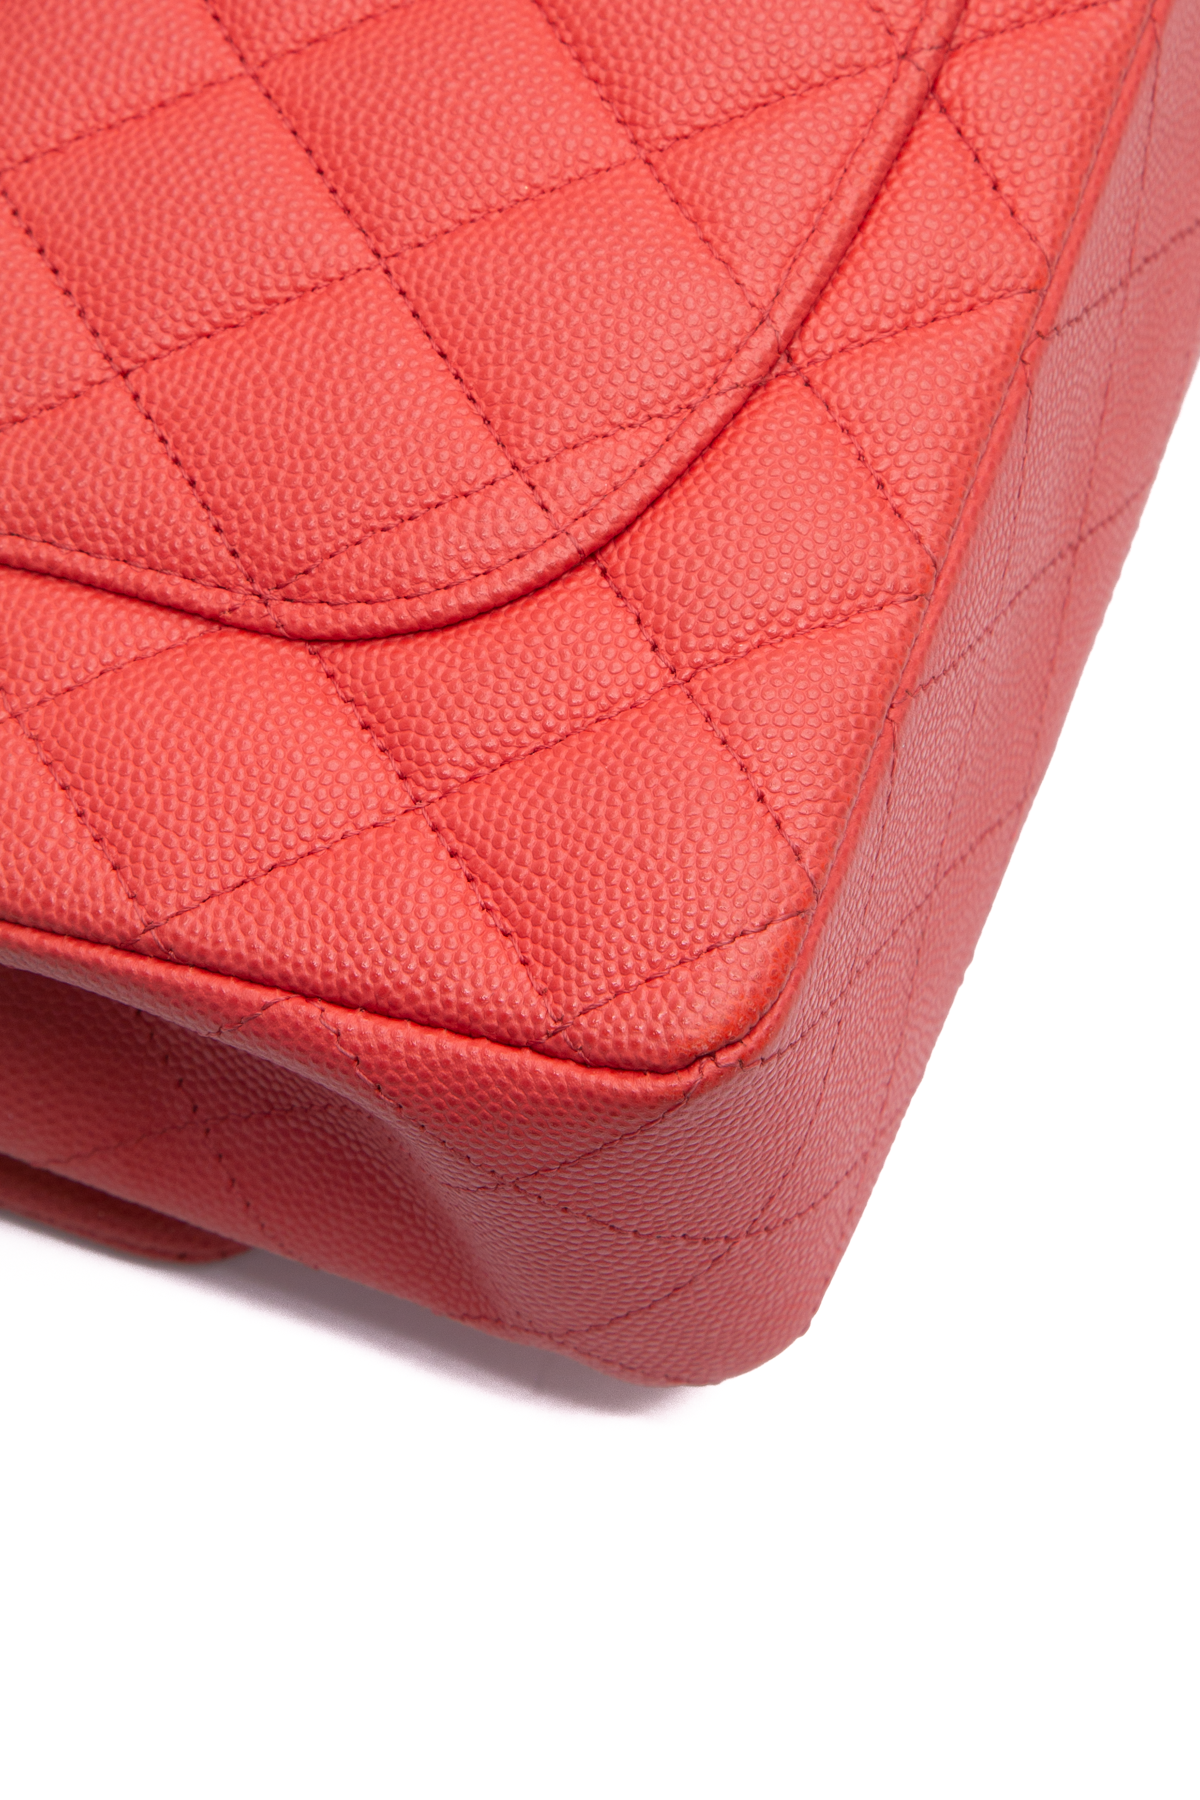 Chanel Jumbo Double Flap Bag - Couture USA